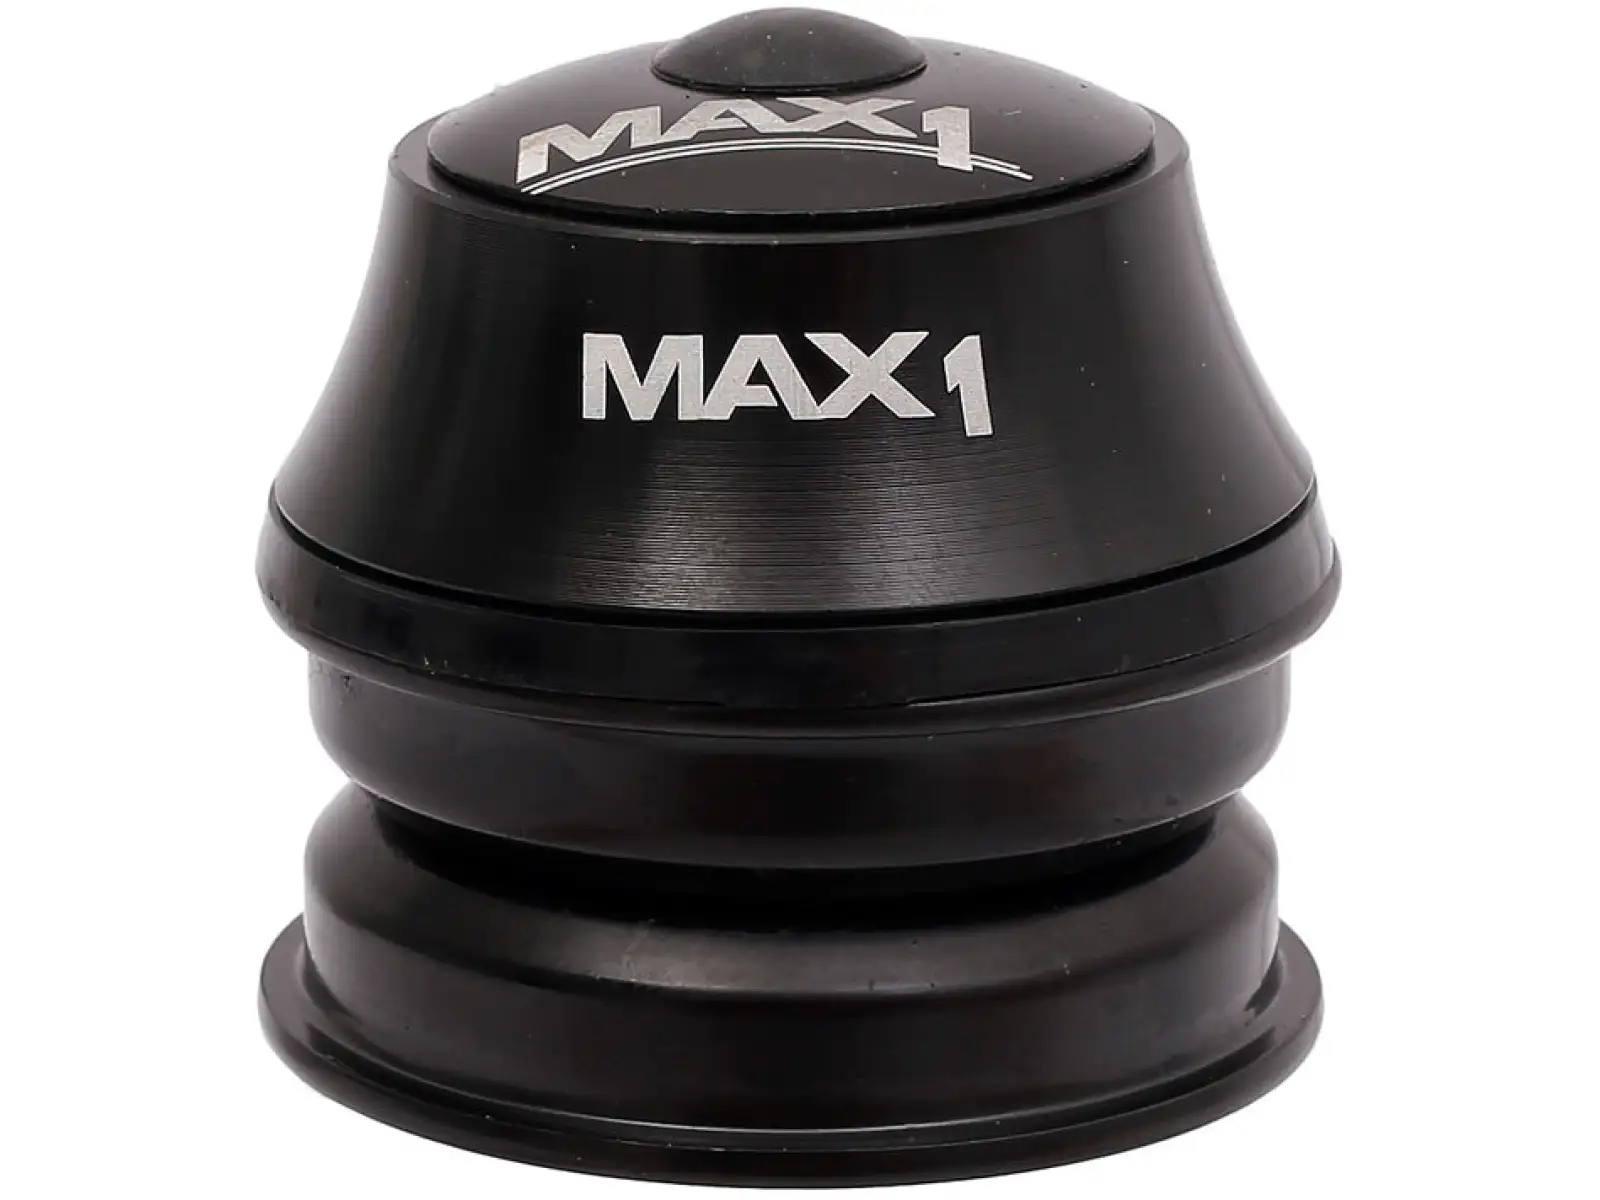 MAX1 1 1/8" semi-integrované hlavové složení černé s věnečky